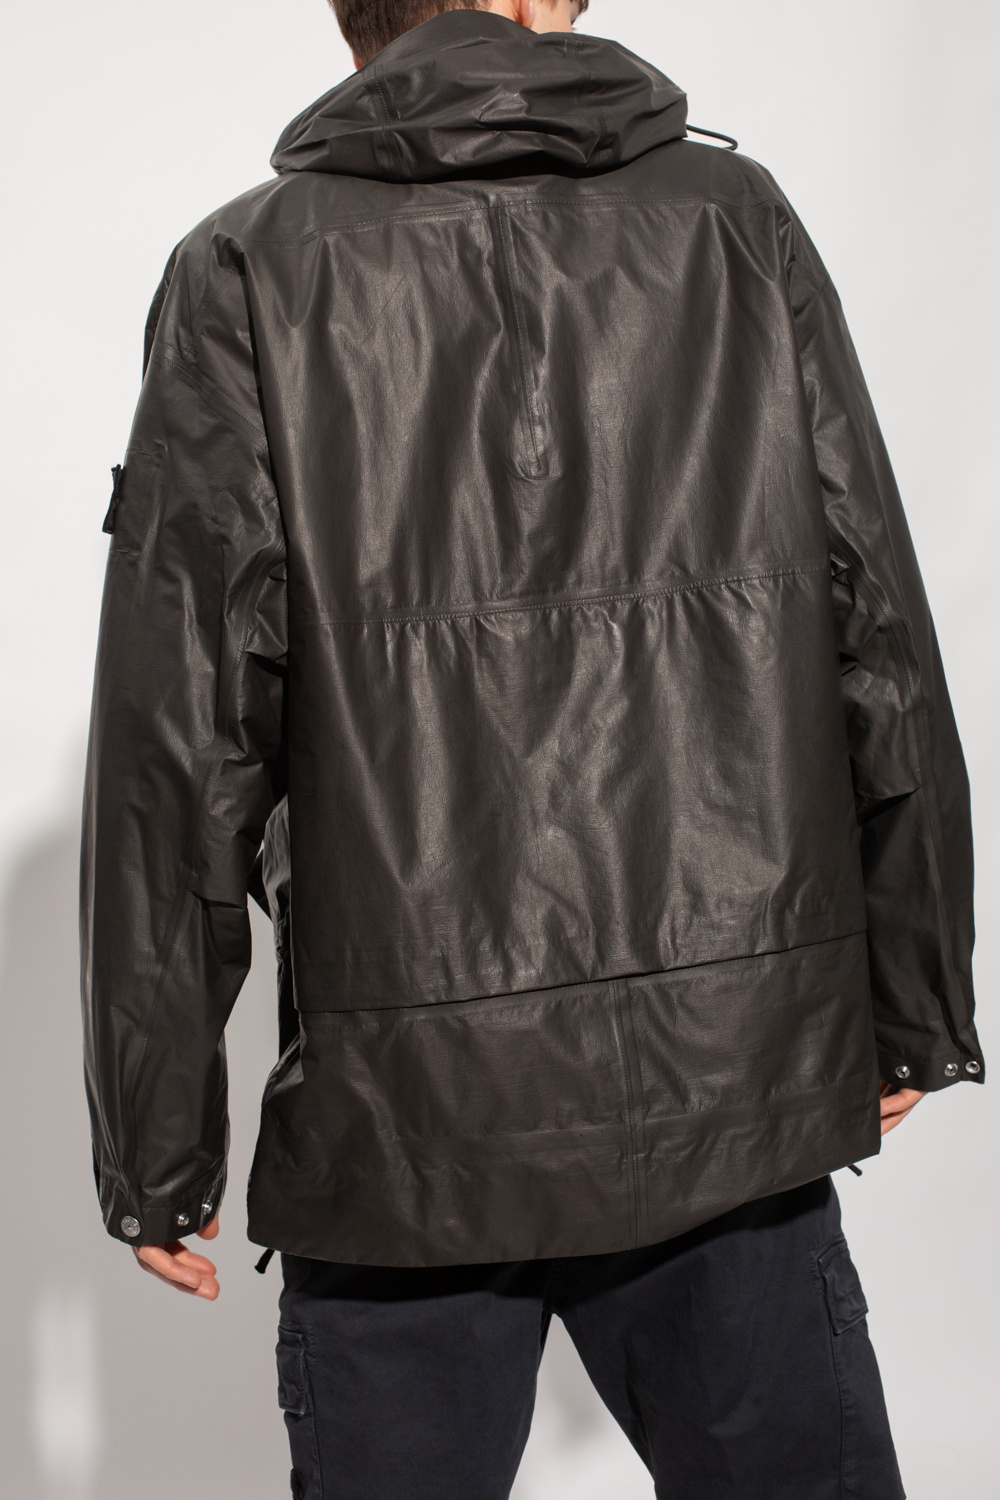 Stone Island Waterproof MONCLER jacket